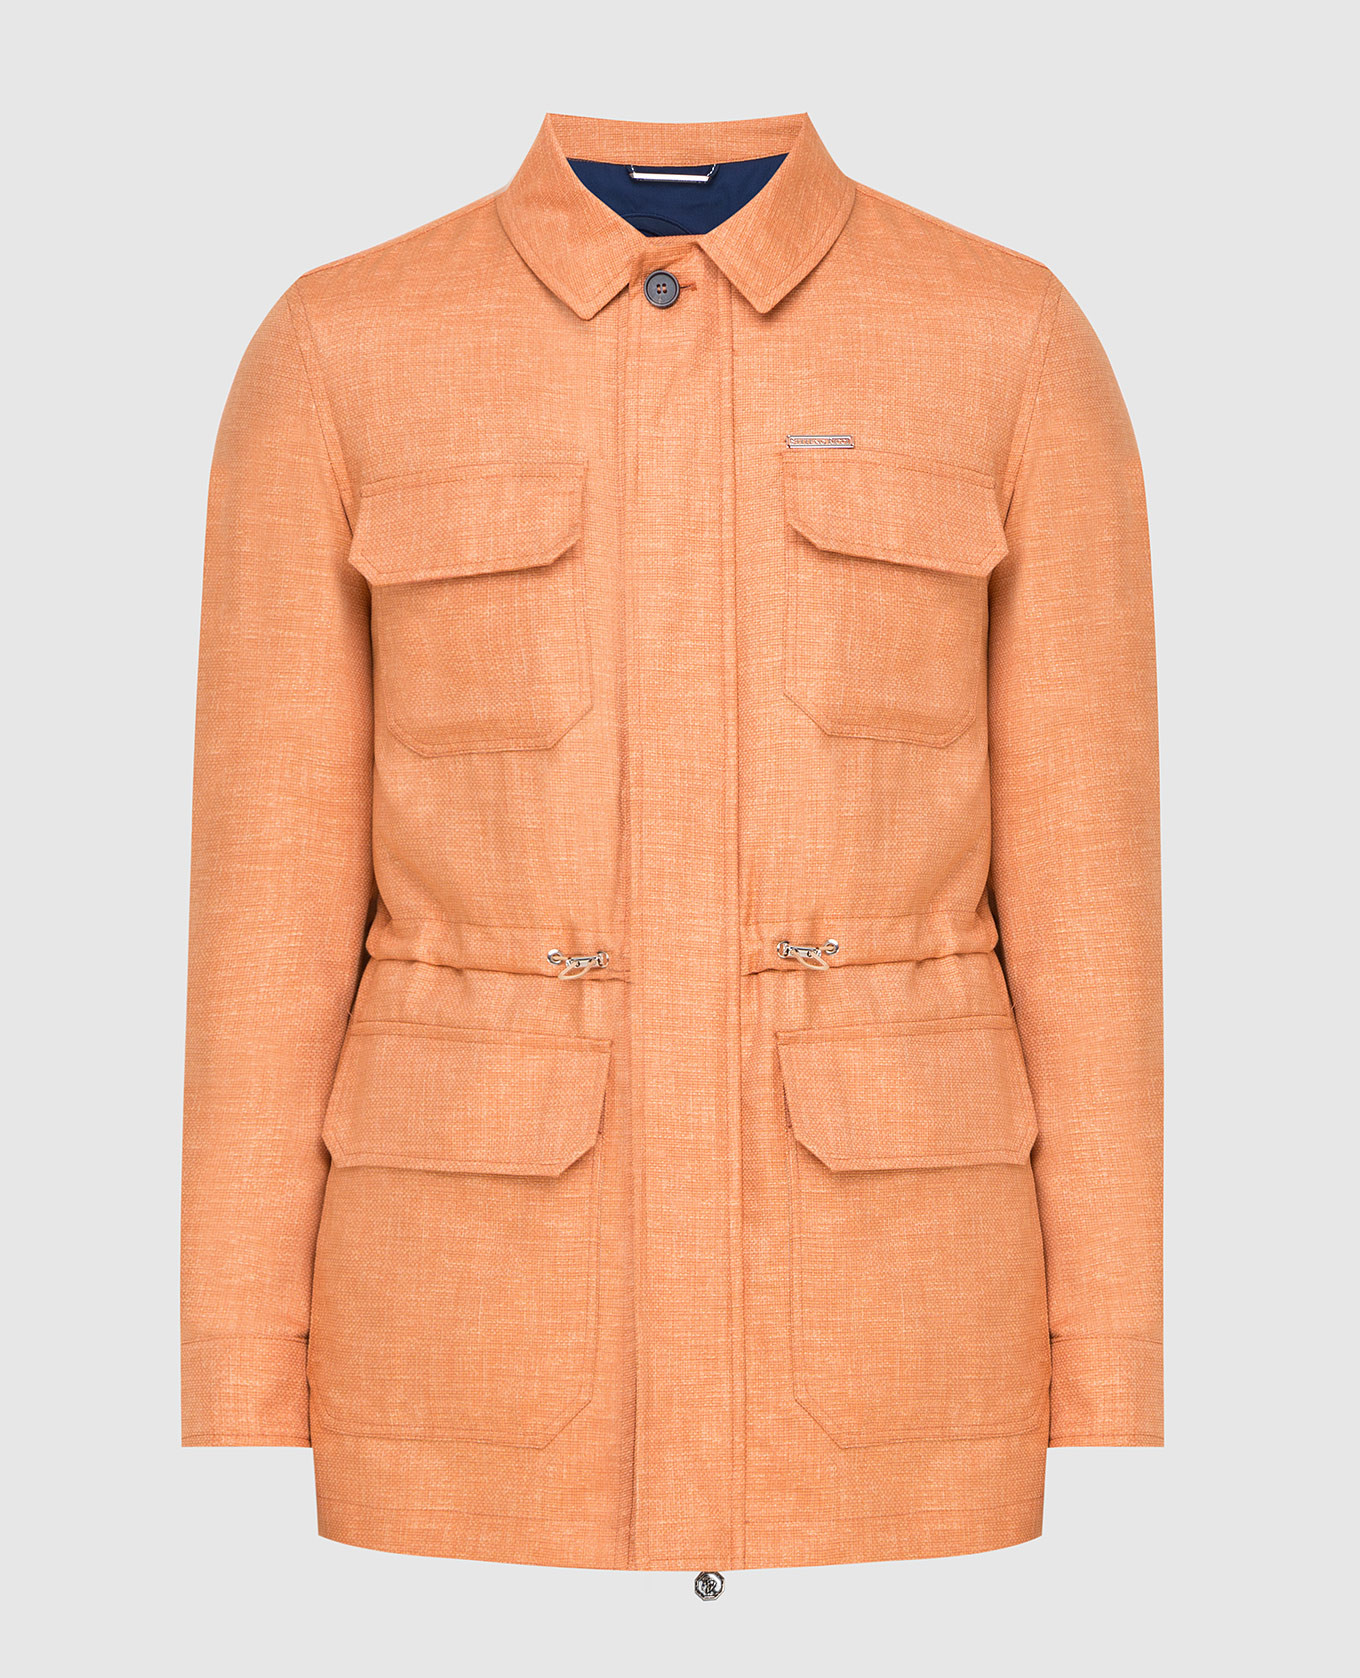 Orange silk and cashmere jacket